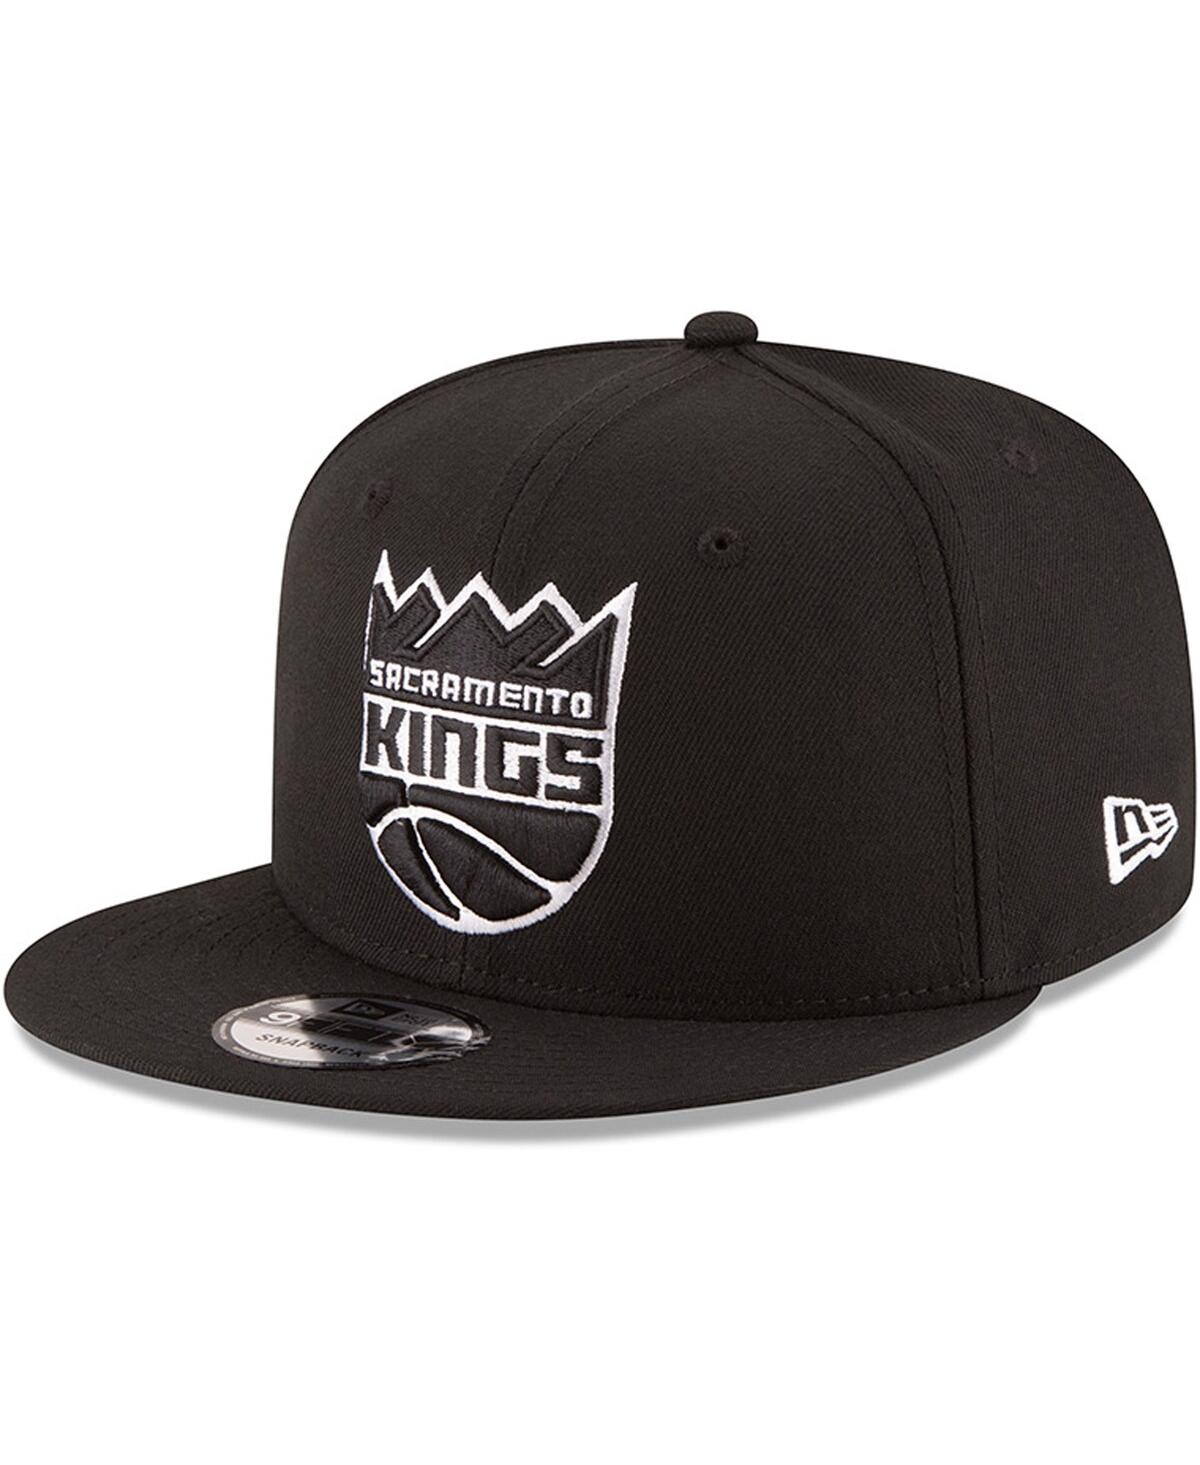 Lids New Era Men's Black Sacramento Kings Black White Logo 9fifty Adjustable Snapback Hat